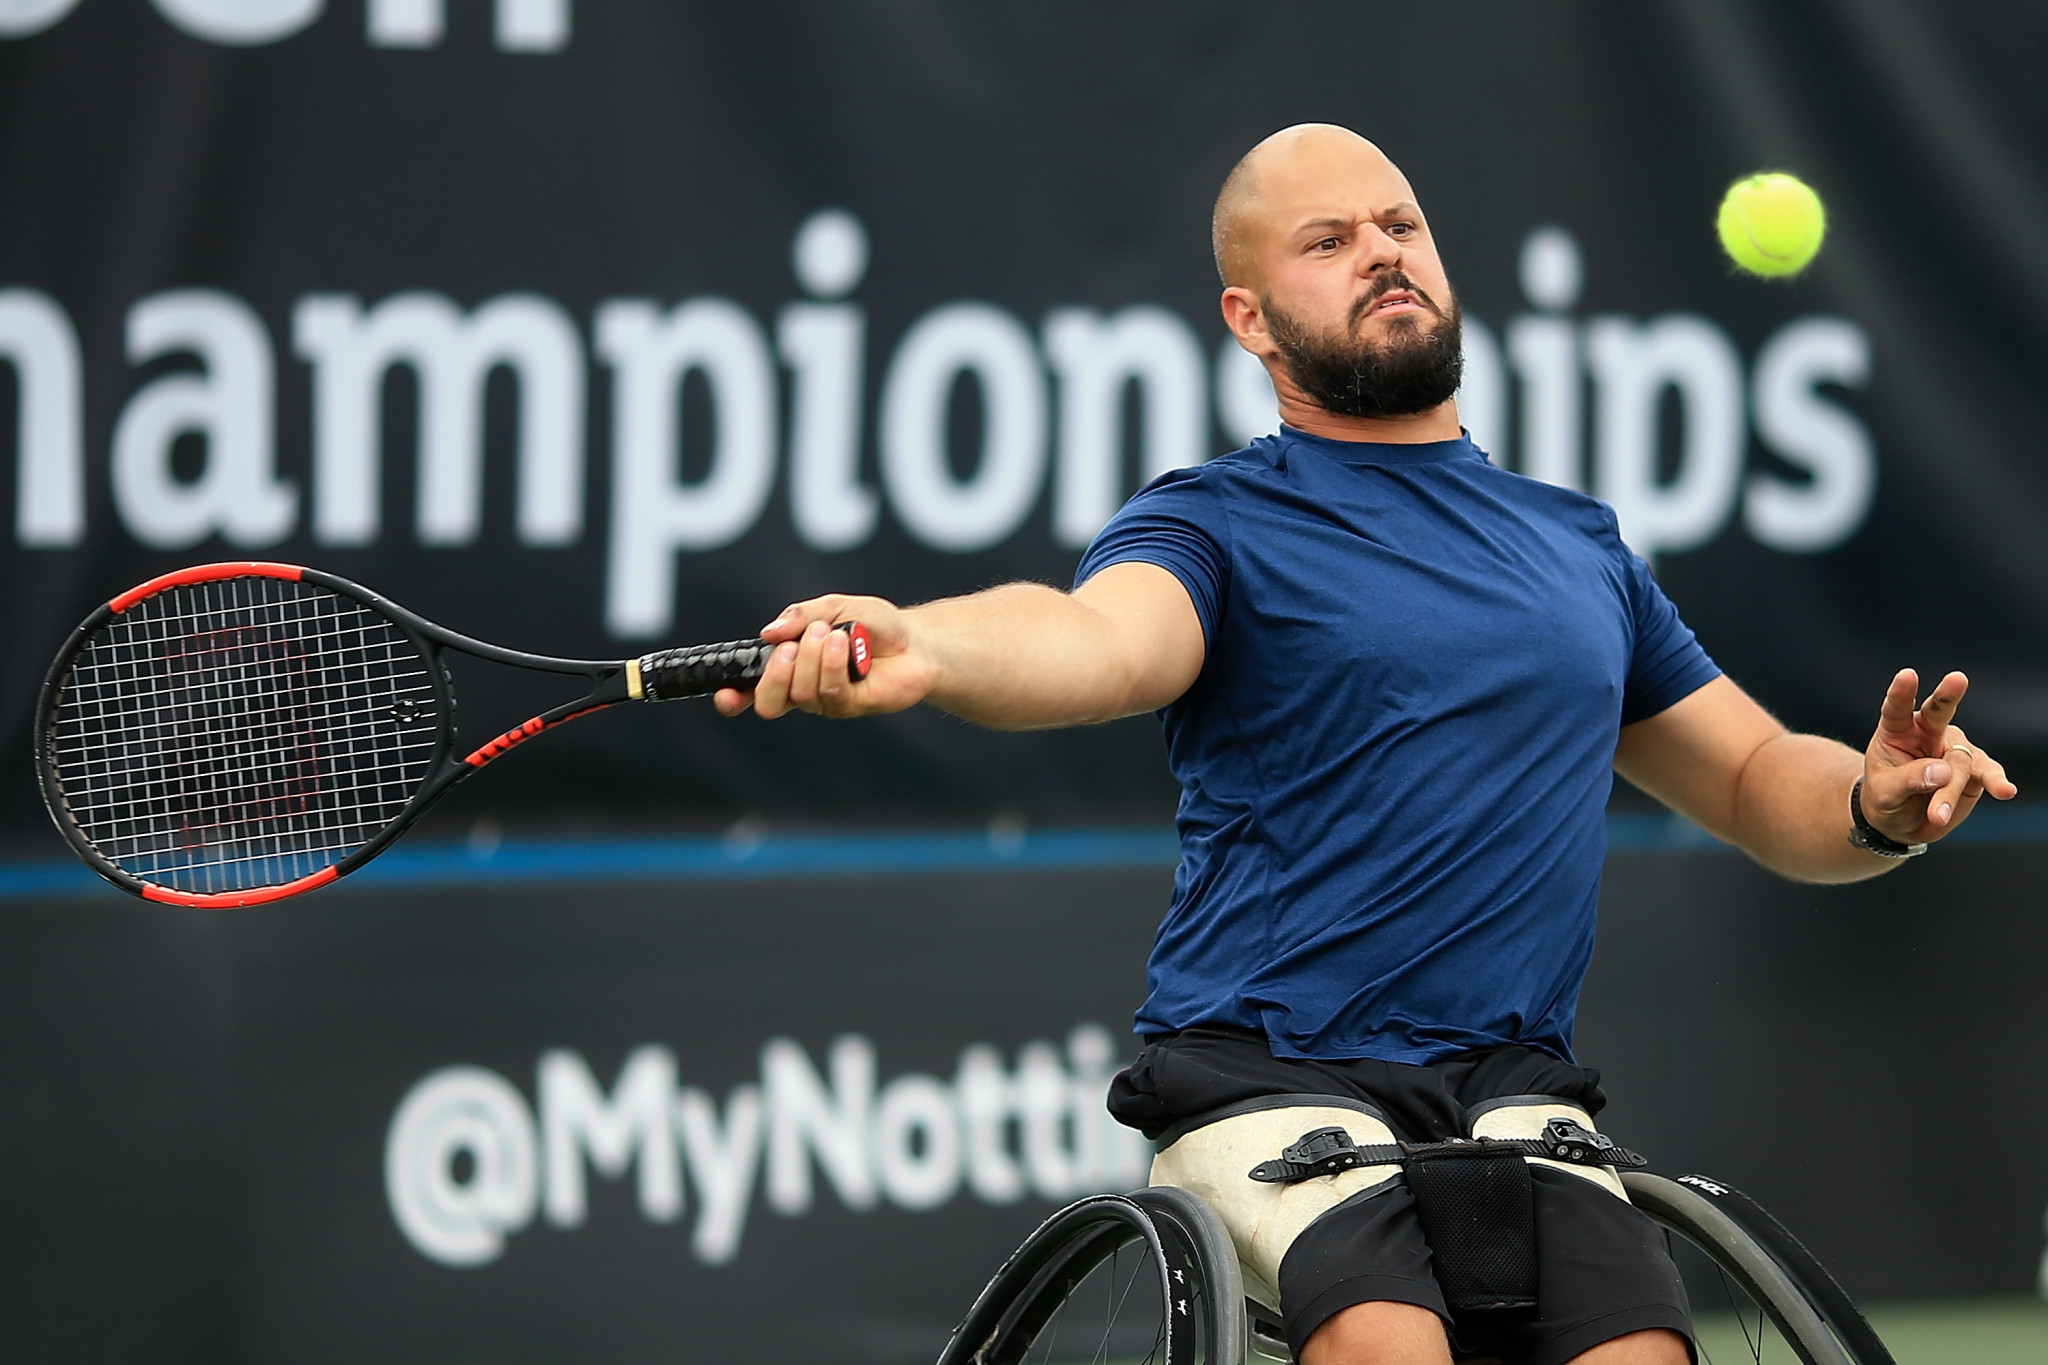 Wimbledon champion Olsson cruises into last-eight at ITF Belgian Open Wheelchair Tennis Championships